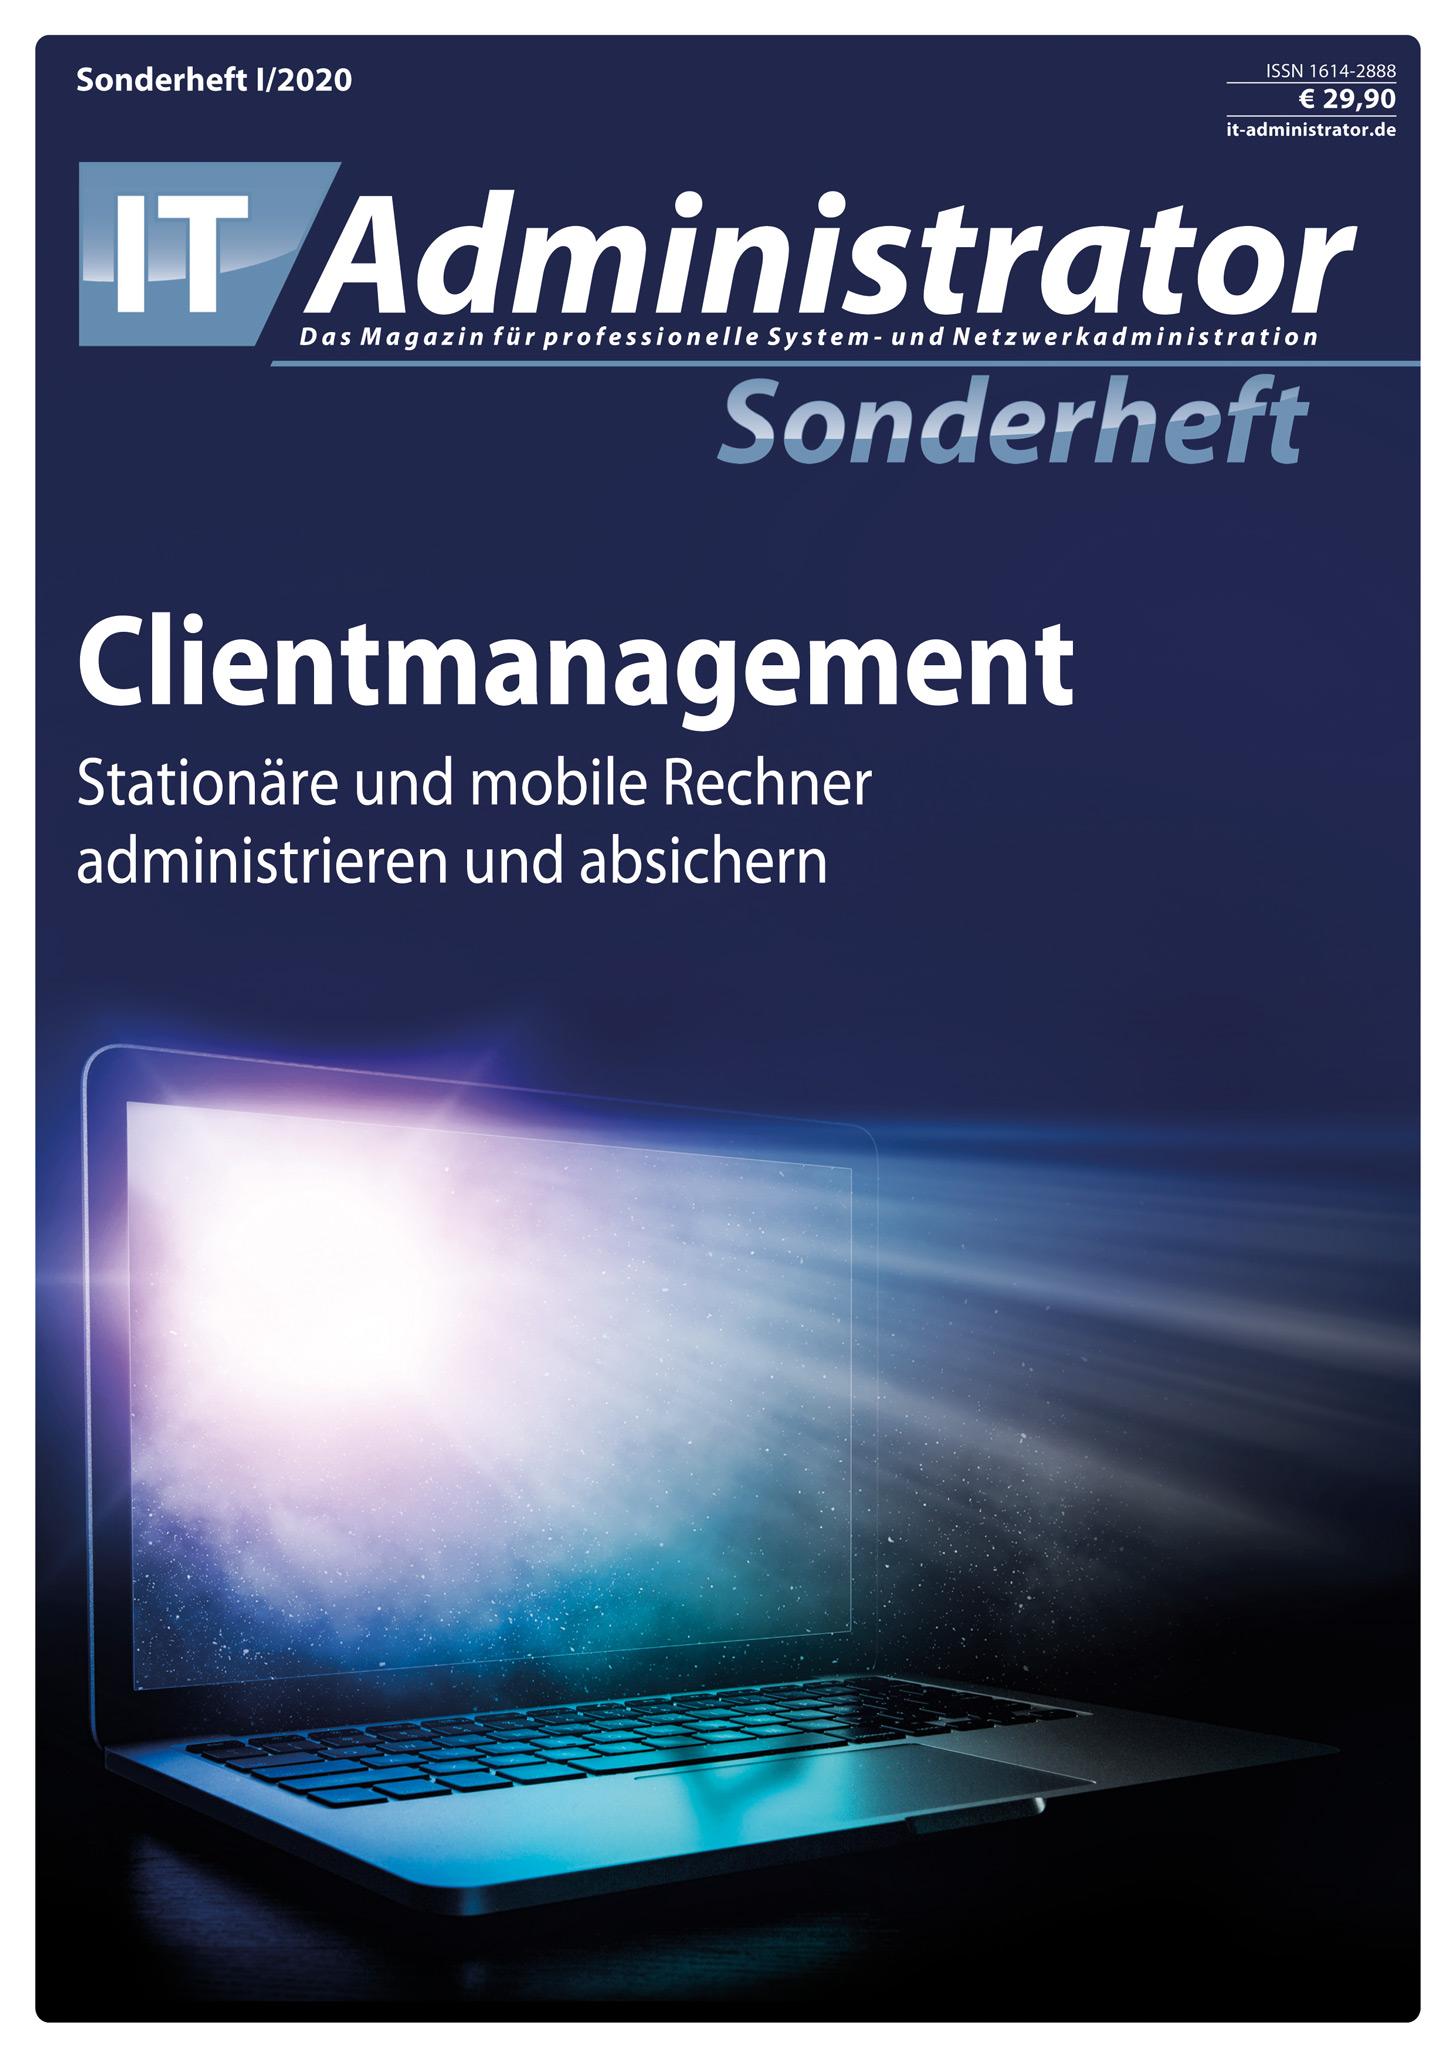 IT-Administrator Sonderheft I/2020 Clientmanagement